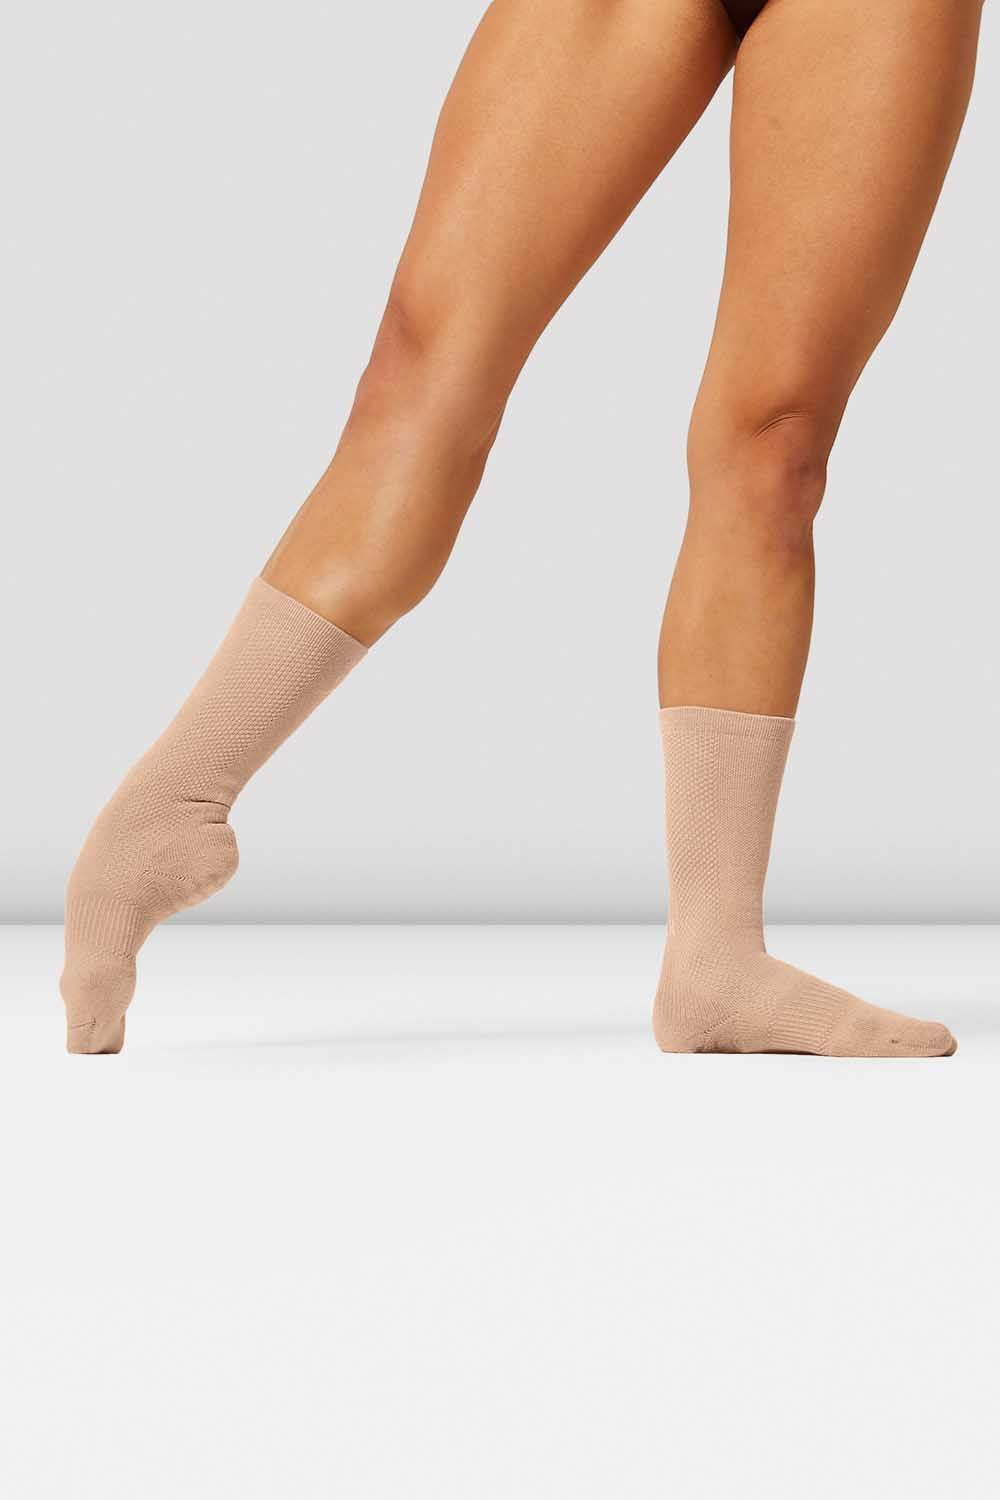 New Latin Dance Accessories Adult Dance Socks Stockings Black